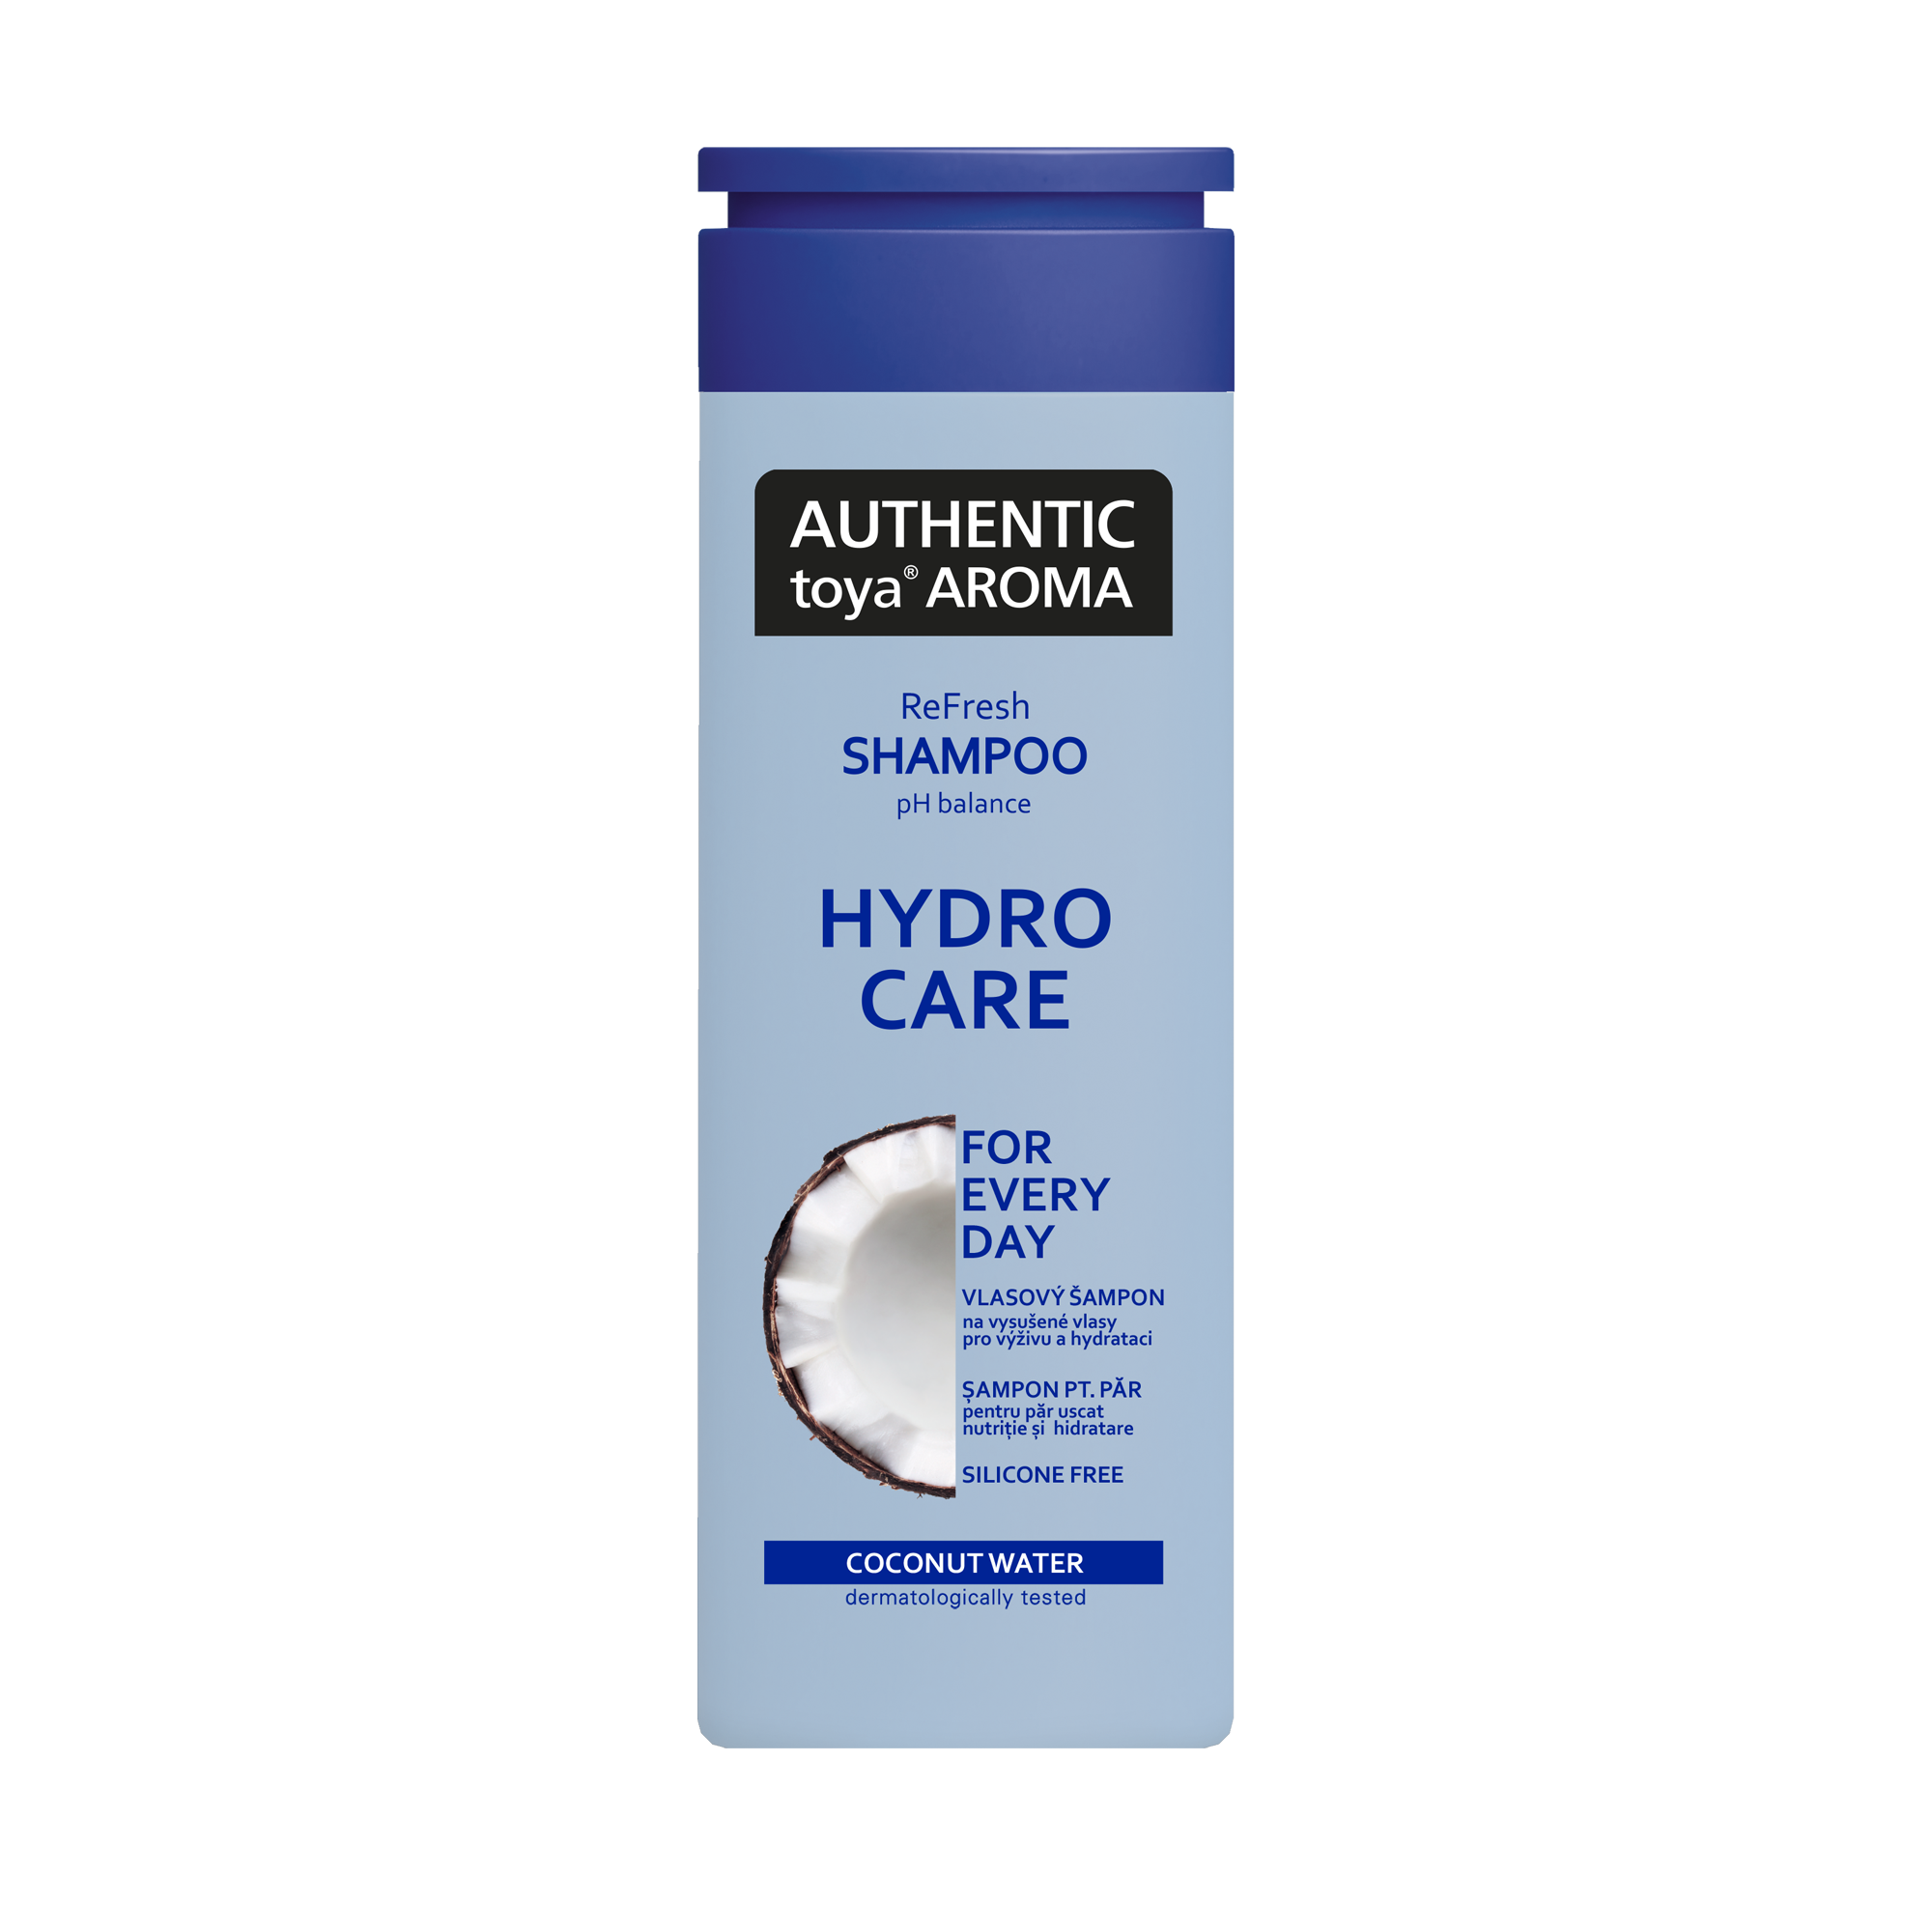 AUTHENTIC toya AROMA șampon de păr Hydro Care